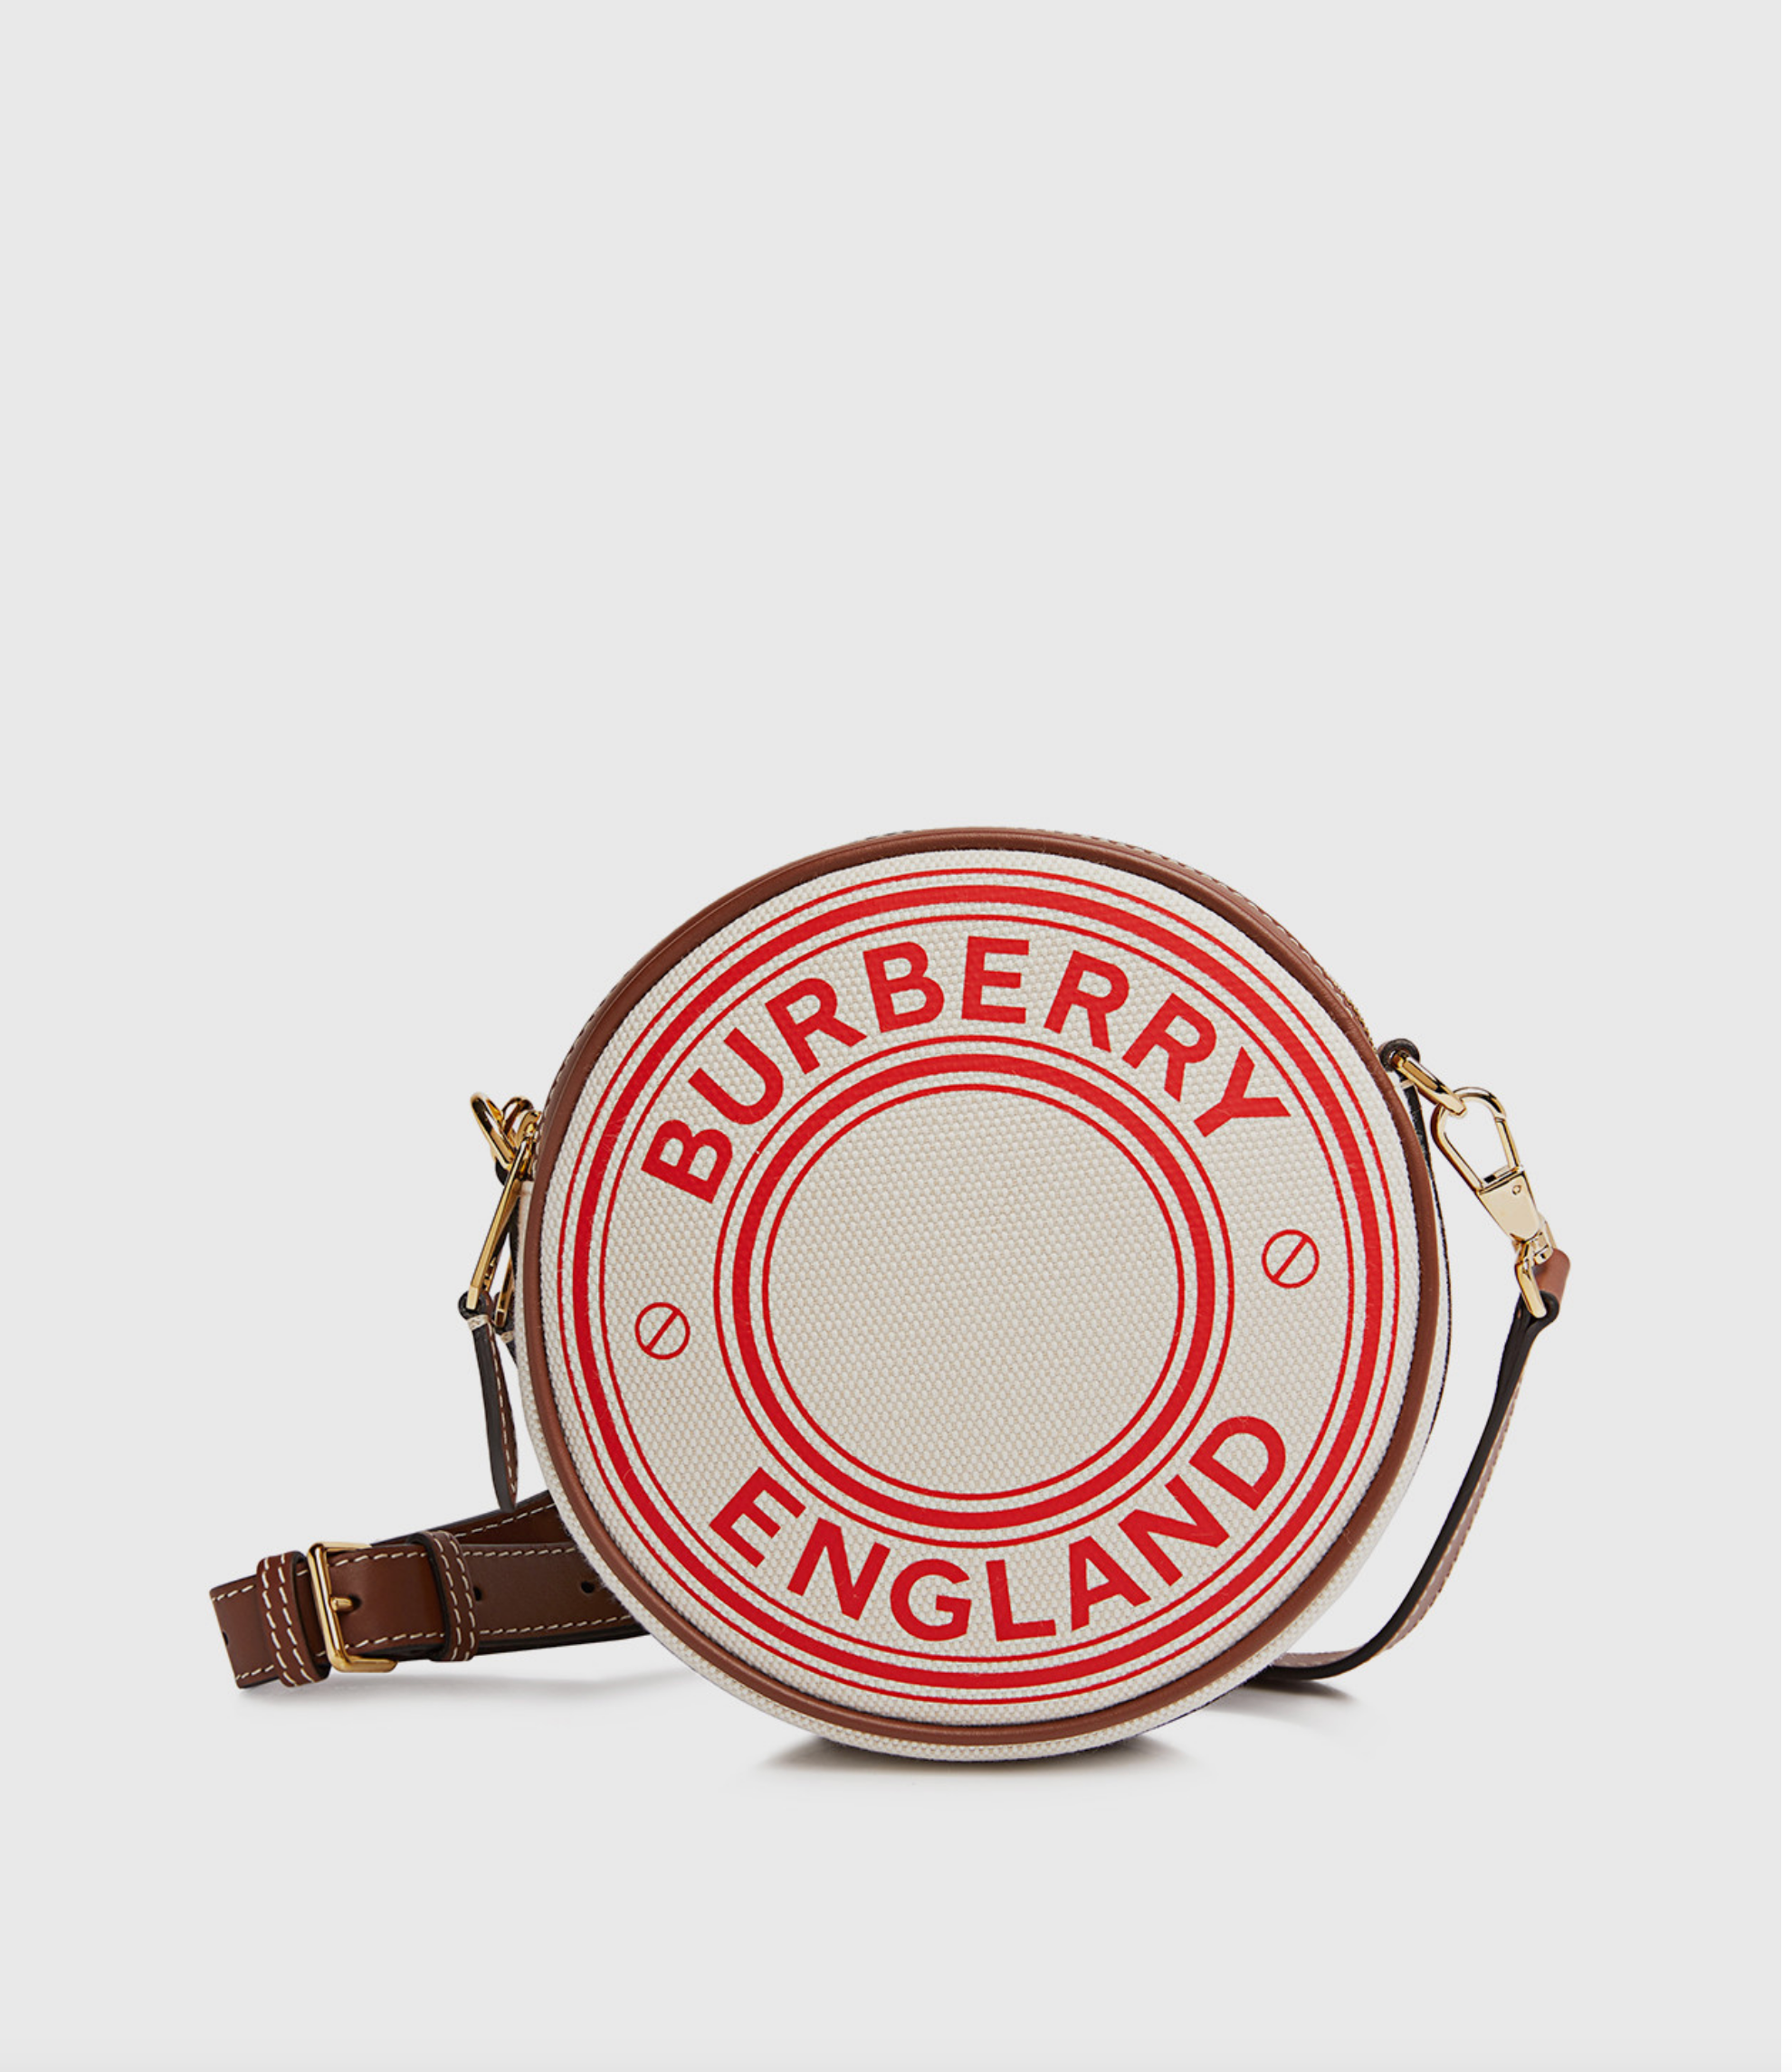 burberry louise logo print mini bag item